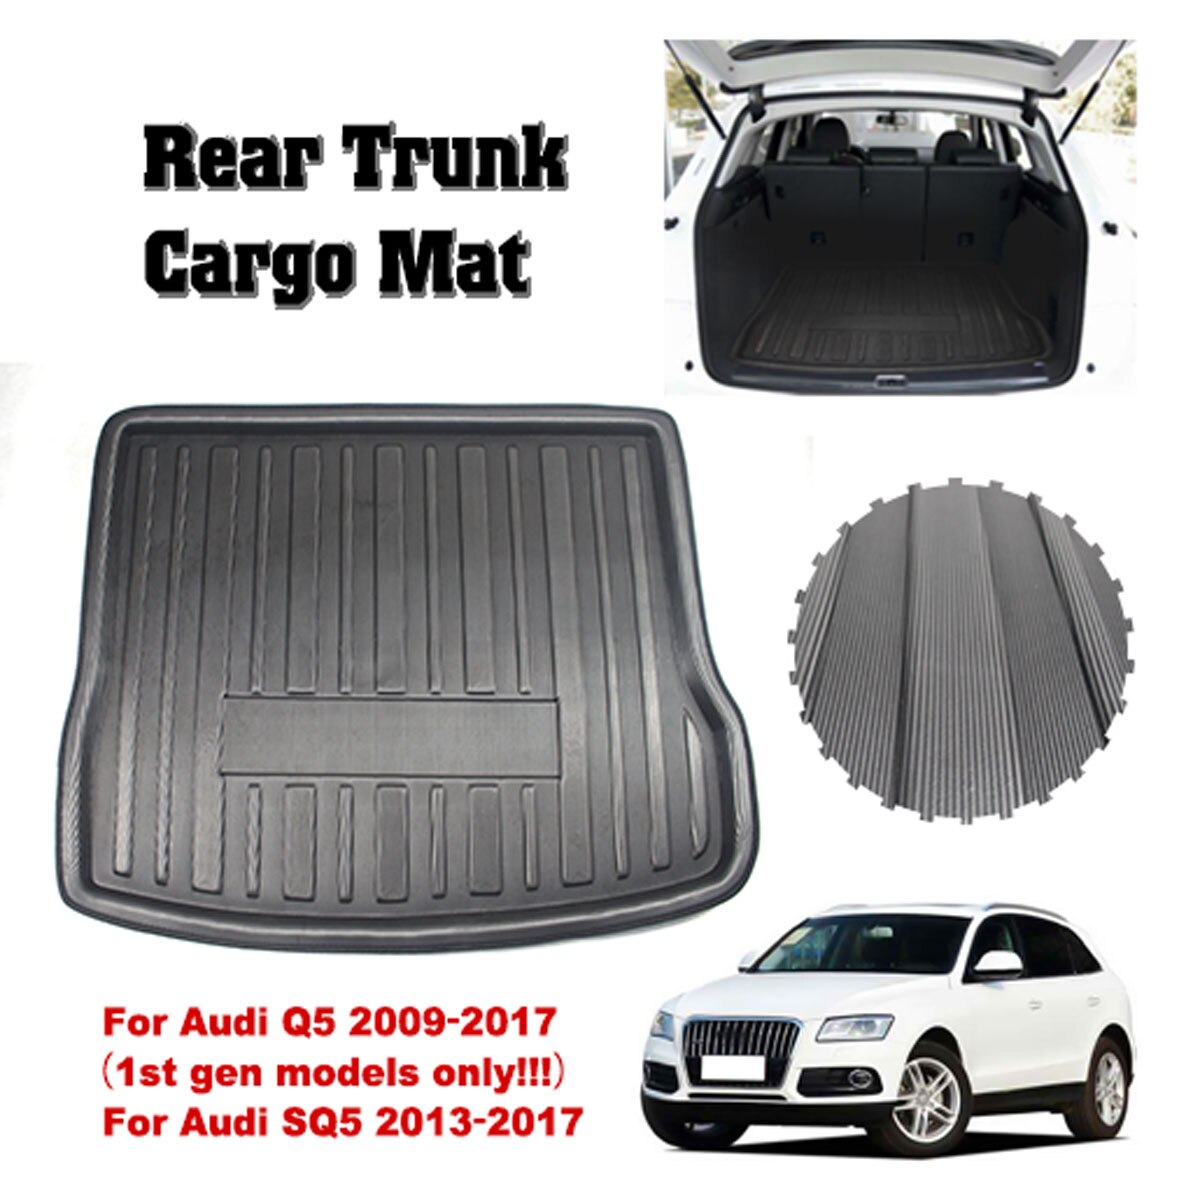 Car Boot Pad Carpet Cargo Mat Trunk Liner Tray Floor Cover Mat Fit for Audi Q5 2013 2014 2015 2016 2017 2018 2019 